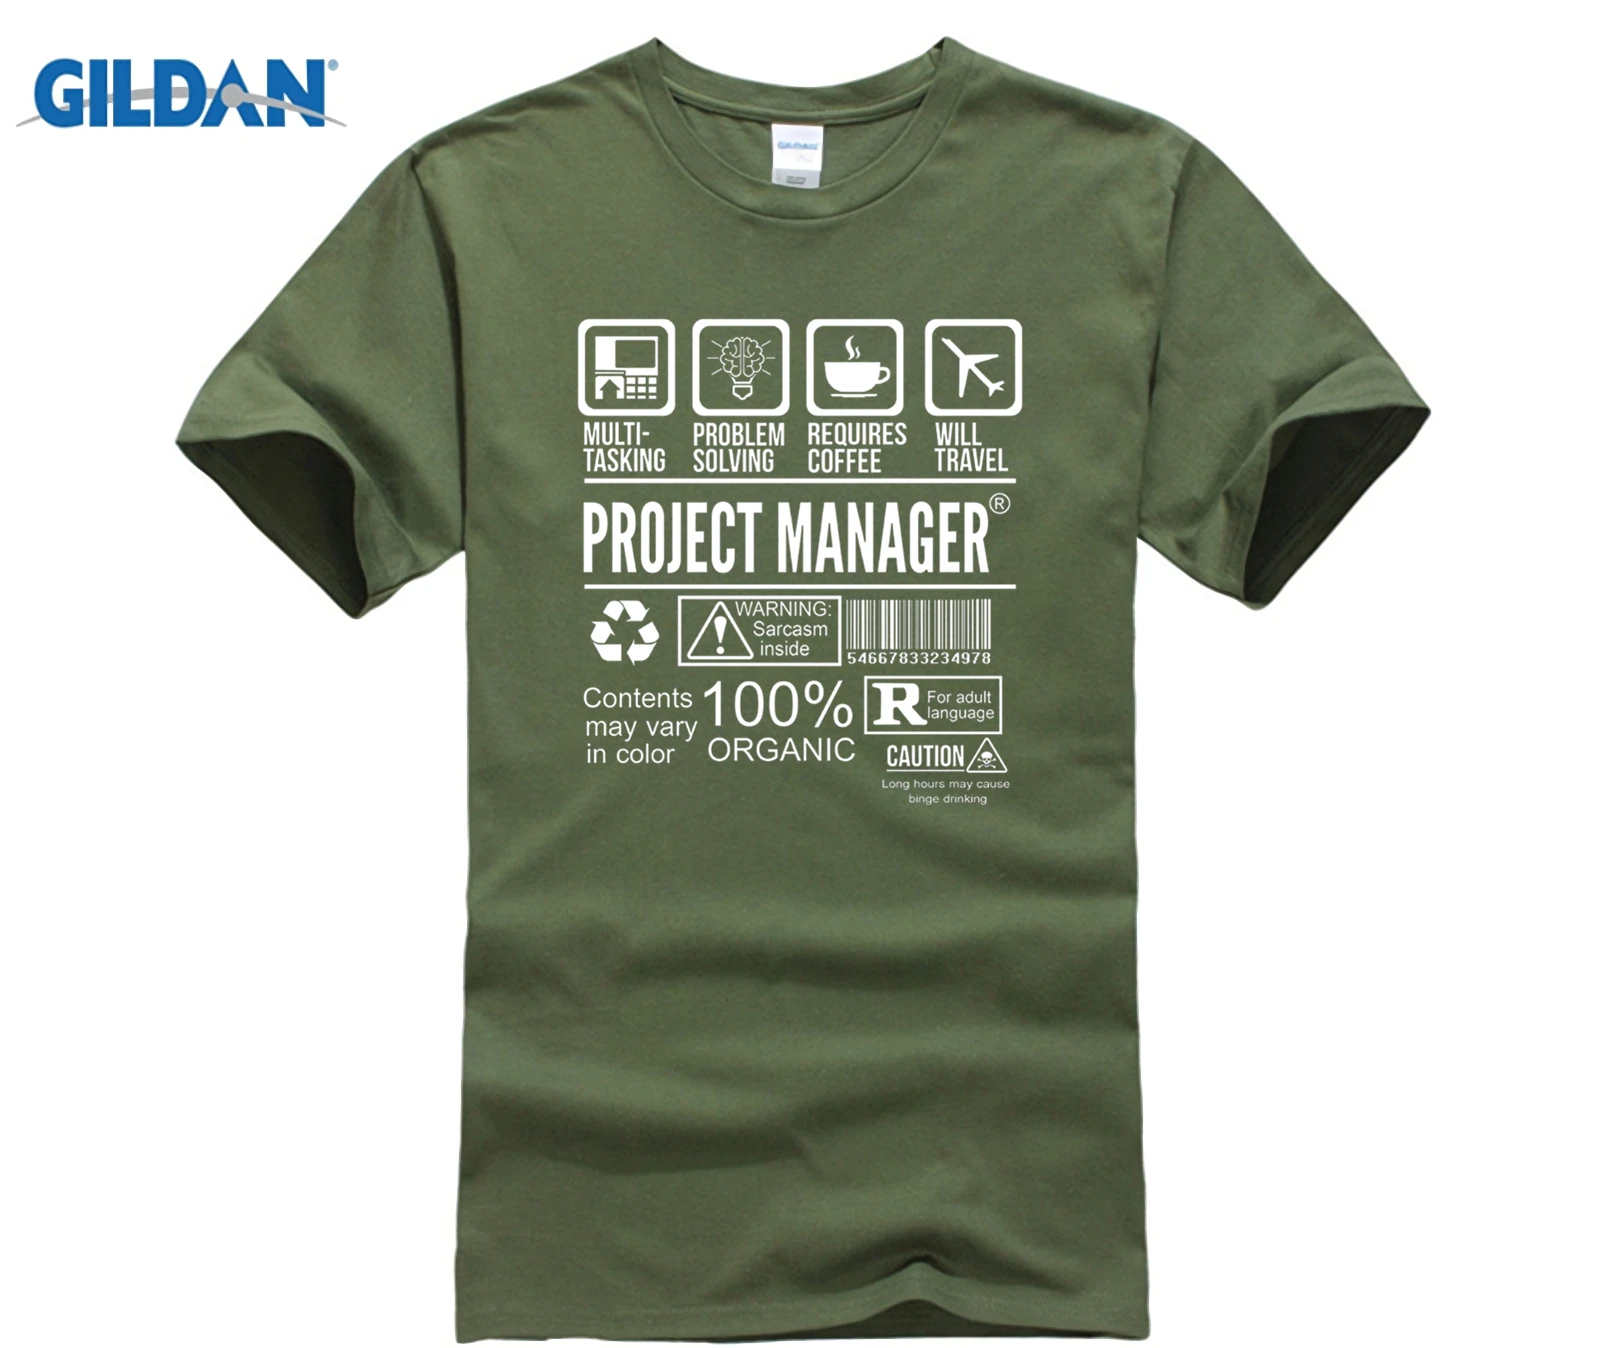 

GILDAN project manager shirt- Project manager multi-tasking sun men T-shirt